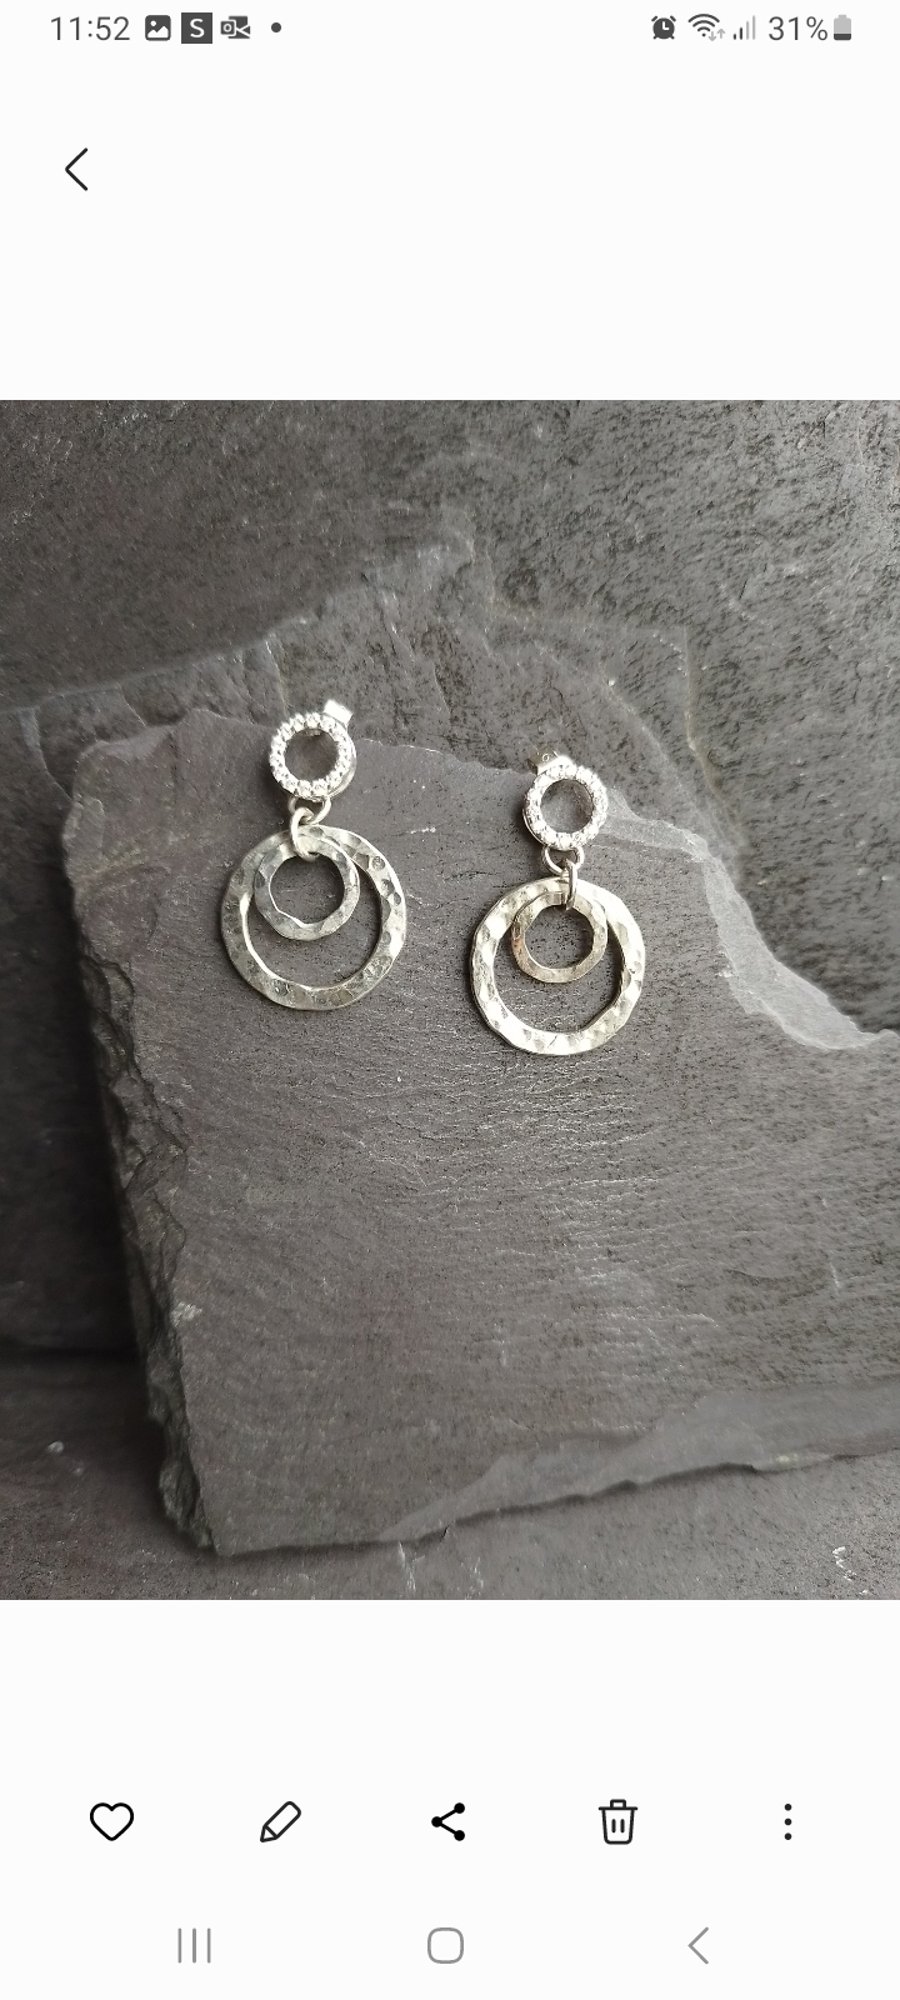 Textured sterling silver, dropper earrings 